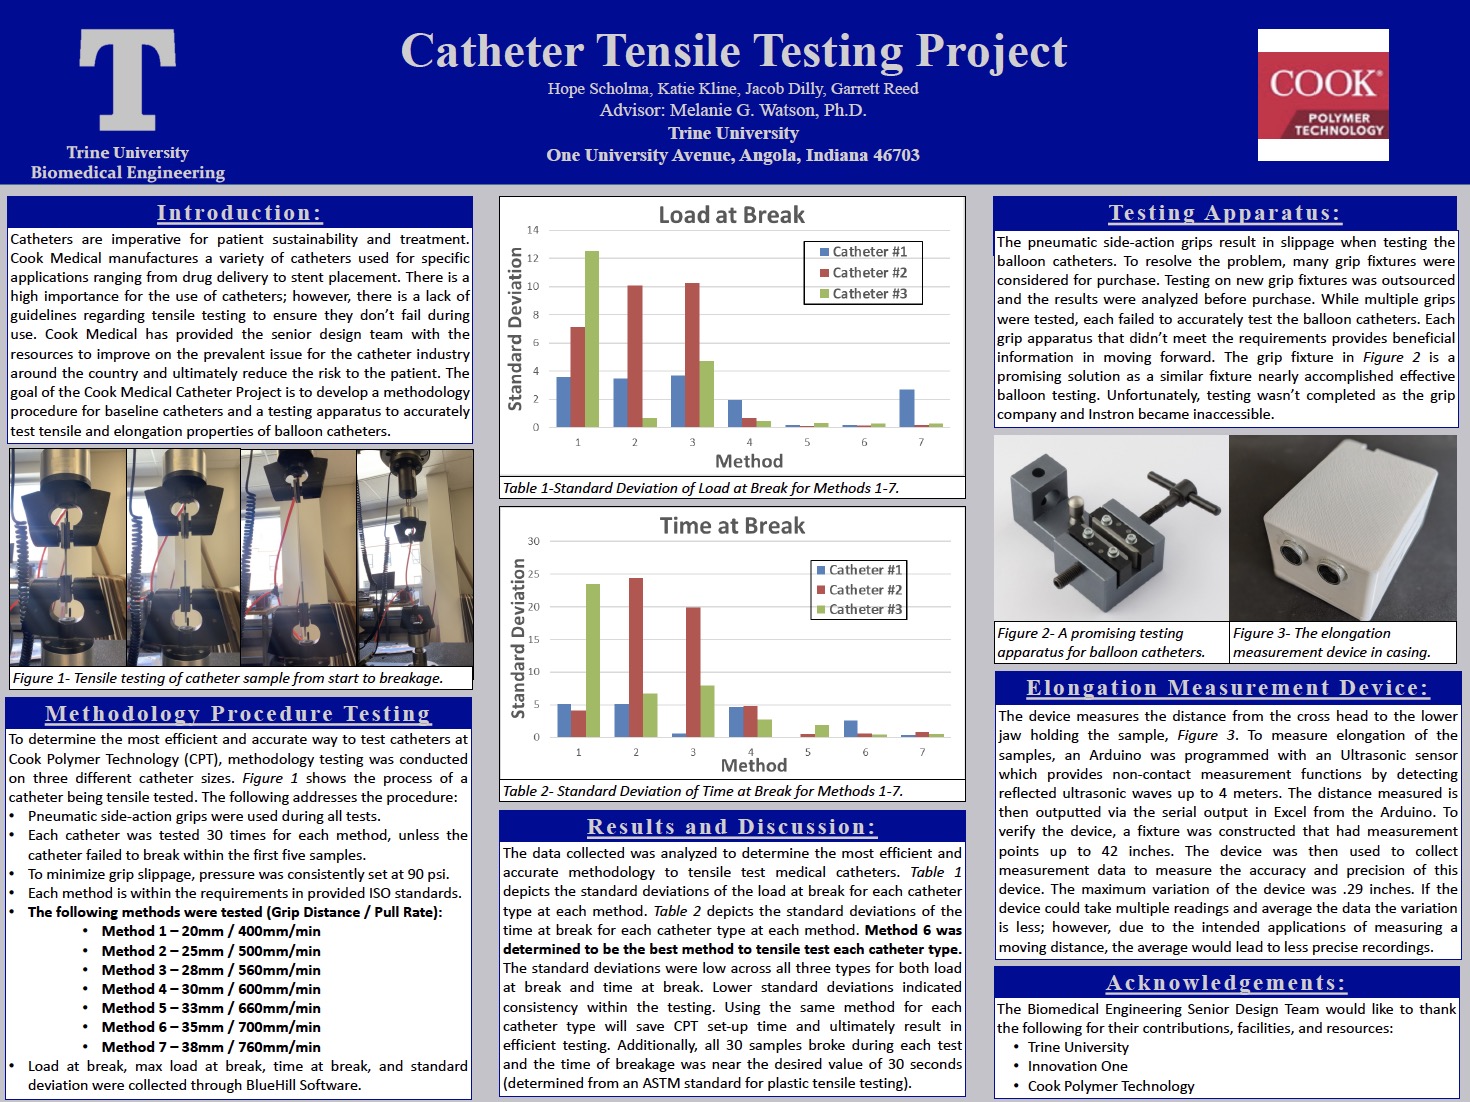 Catheter Tensile testing